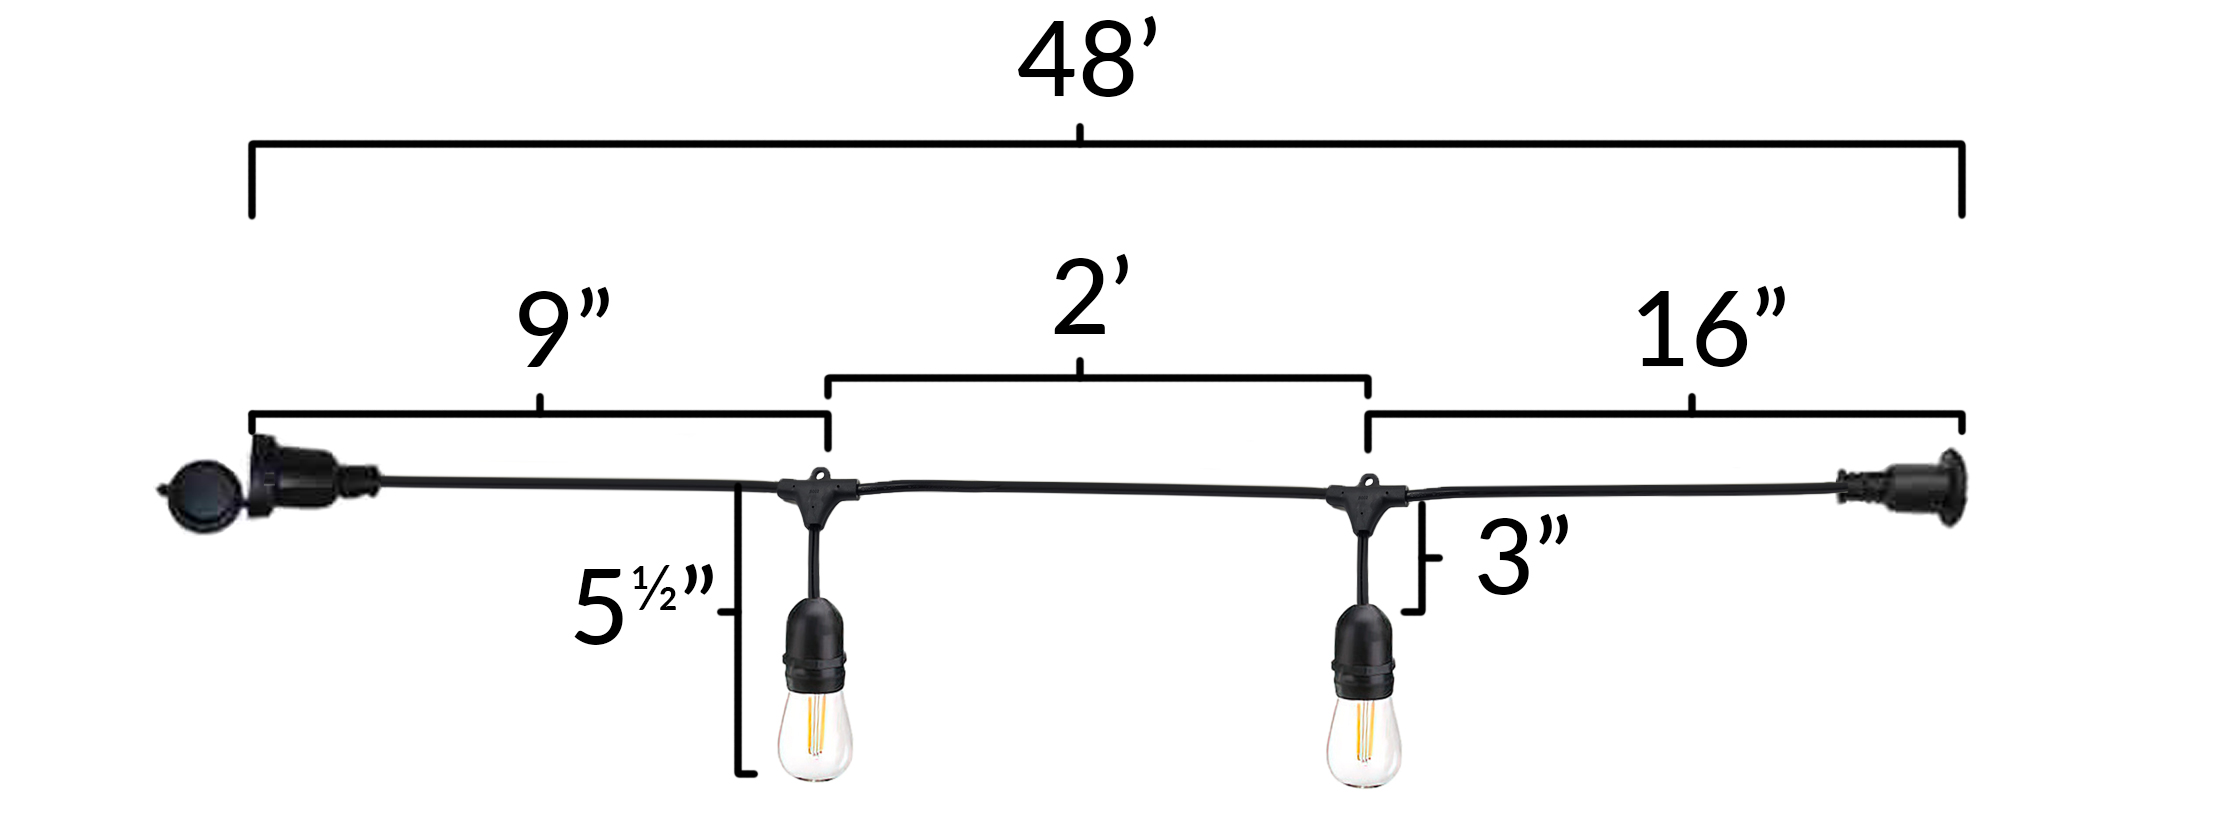 24 LIght Decorative Vintage LED Light String Dimensions Diagram